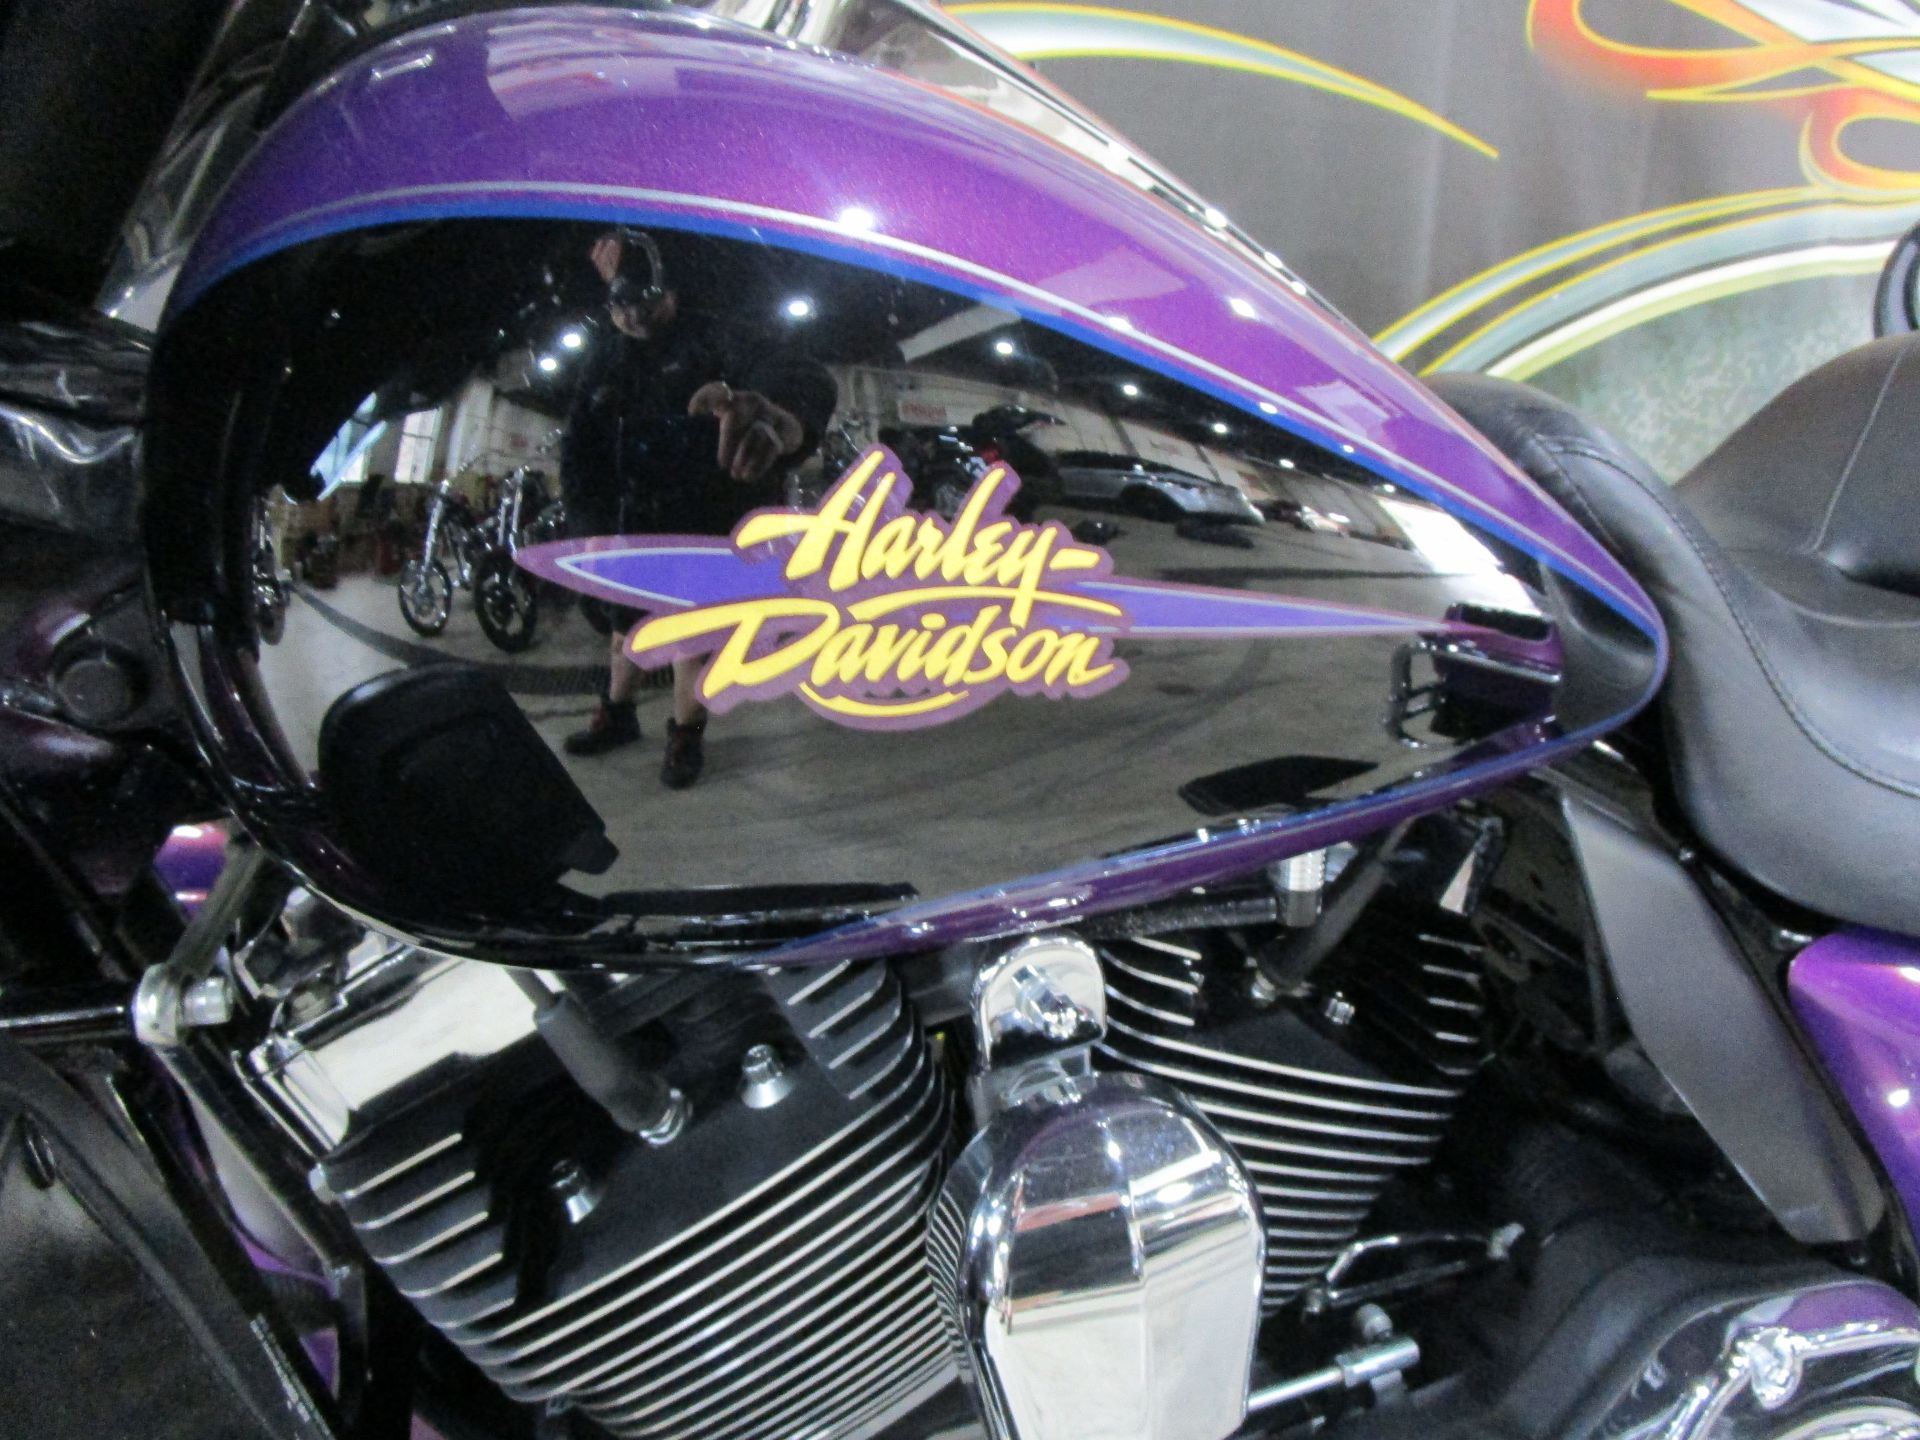 2011 Harley-Davidson Ultra Classic® Electra Glide® in South Saint Paul, Minnesota - Photo 18